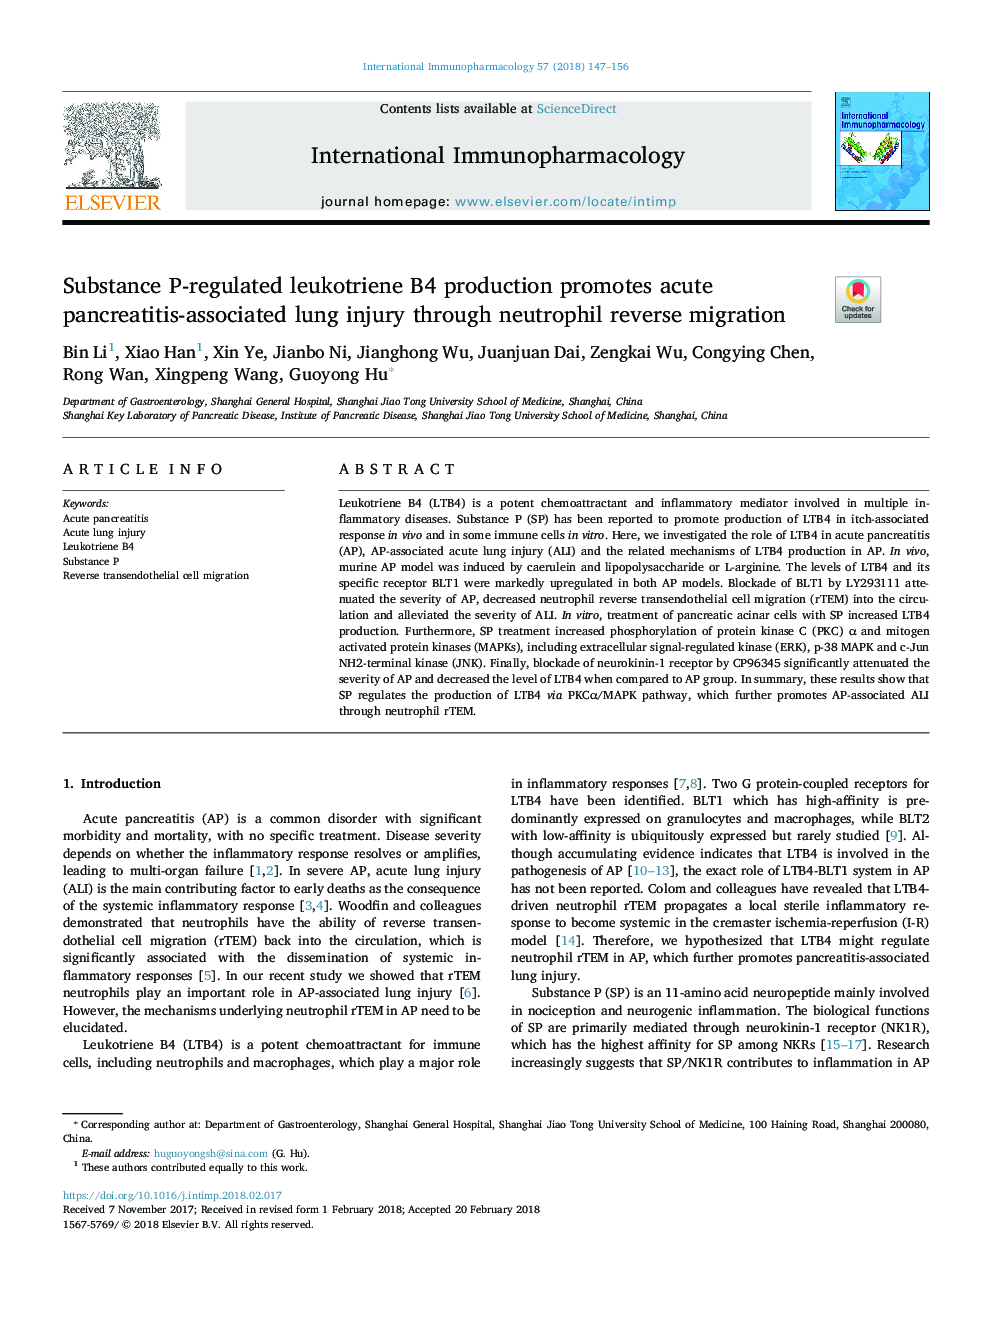 Substance P-regulated leukotriene B4 production promotes acute pancreatitis-associated lung injury through neutrophil reverse migration